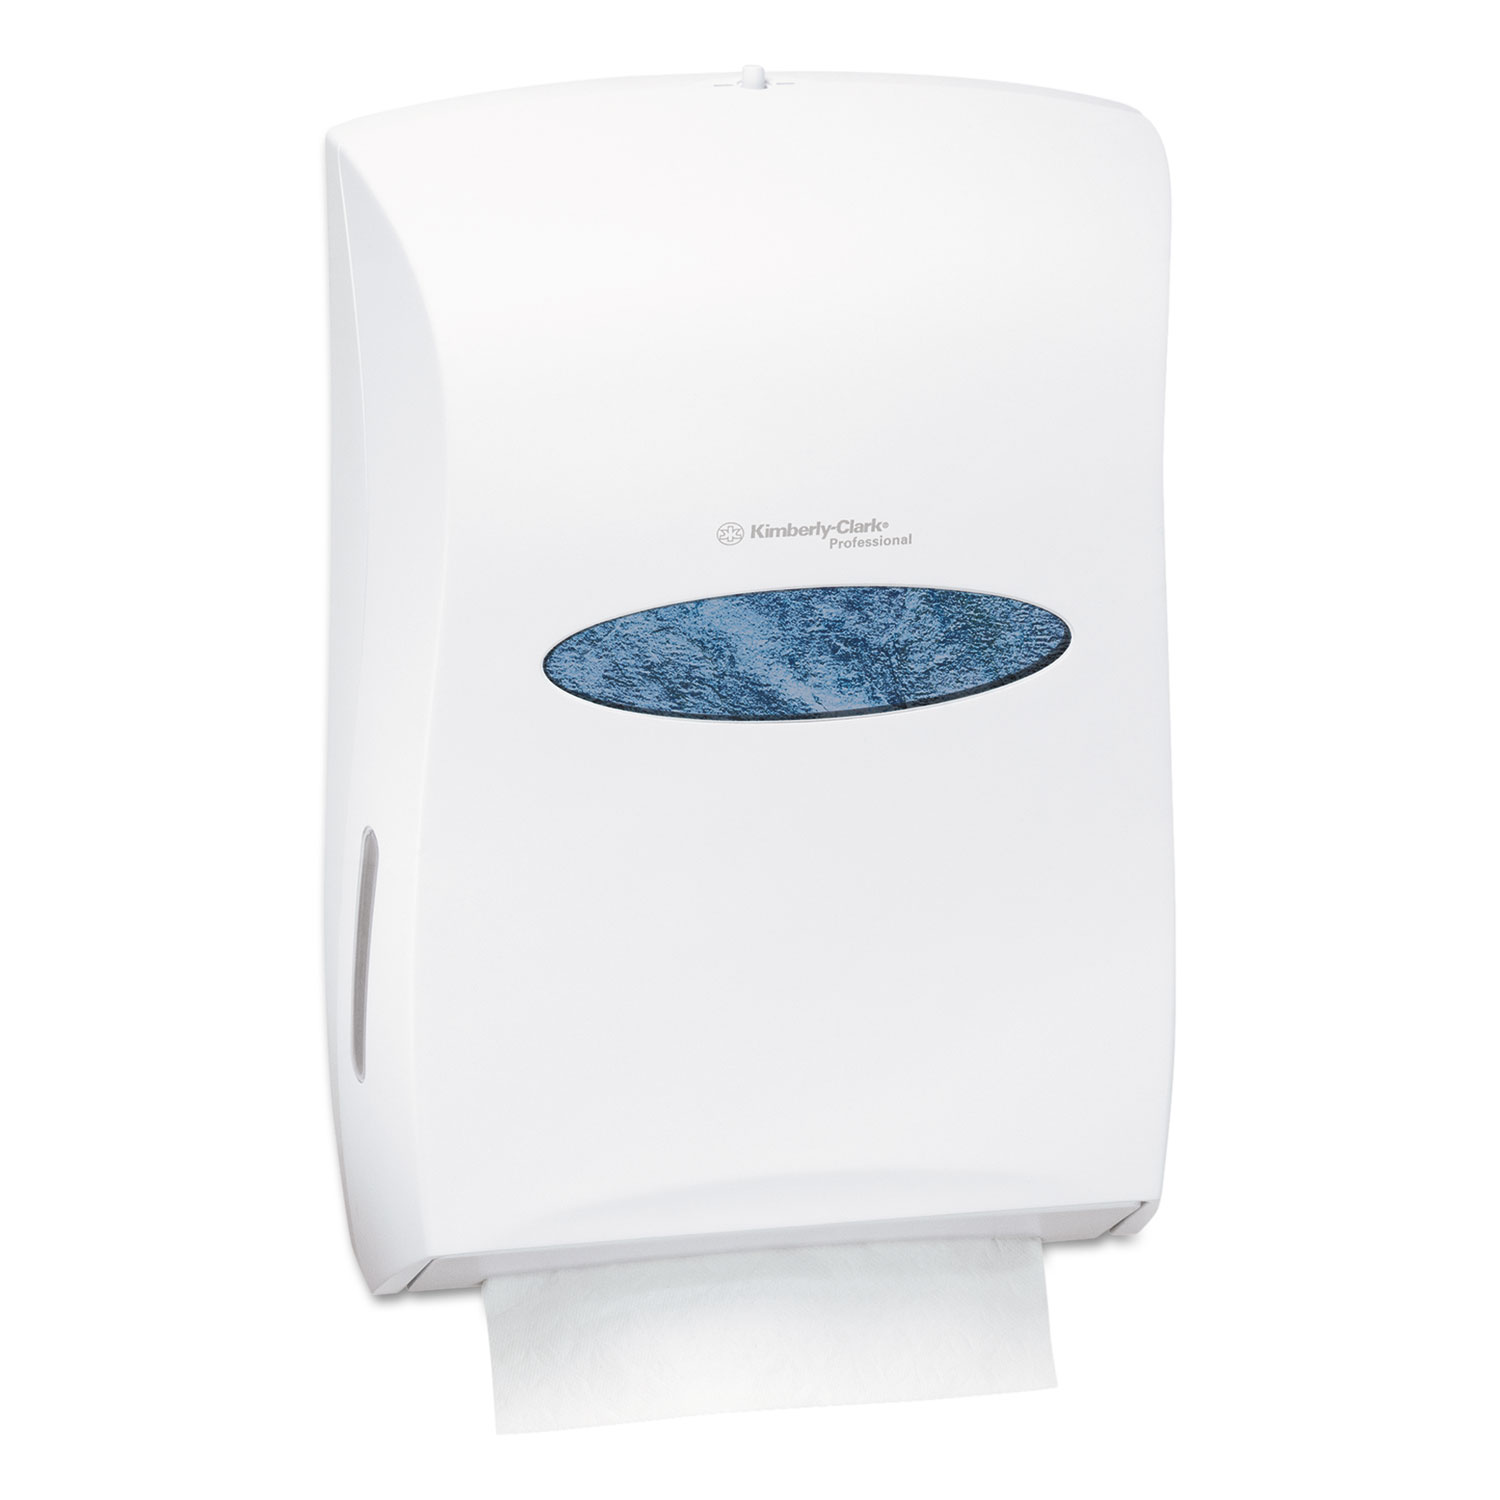  Kimberly-Clark Professional* KCC 09906 Universal Towel Dispenser, 13 31/100w x 5 17/20d x 18 17/20h, White (KCC09906) 